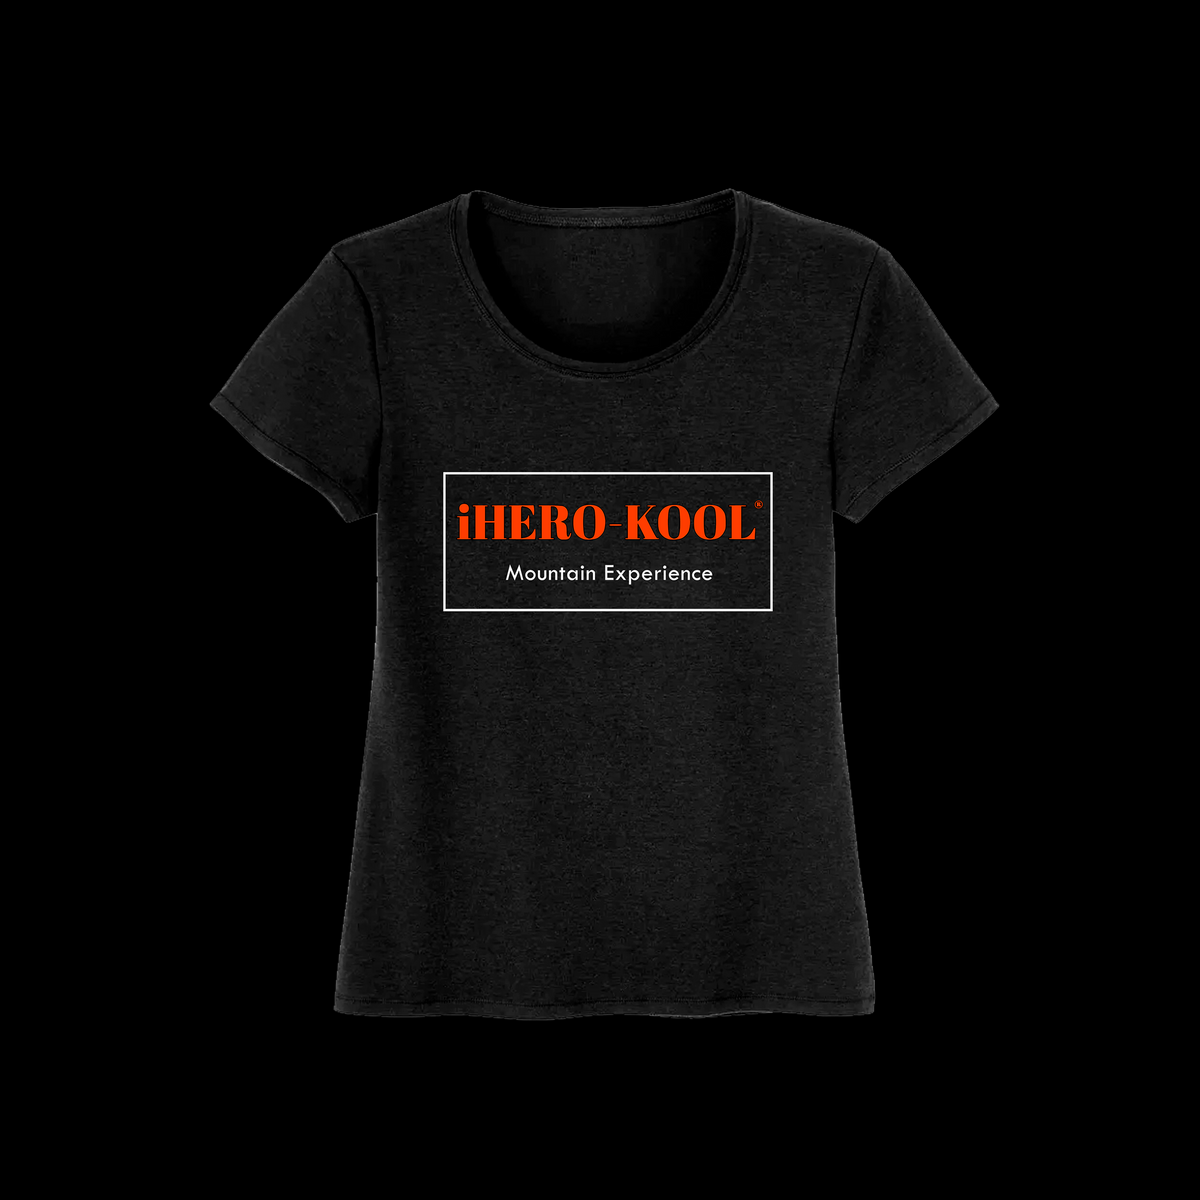 T-Shirt Donna iHERO-KOOL